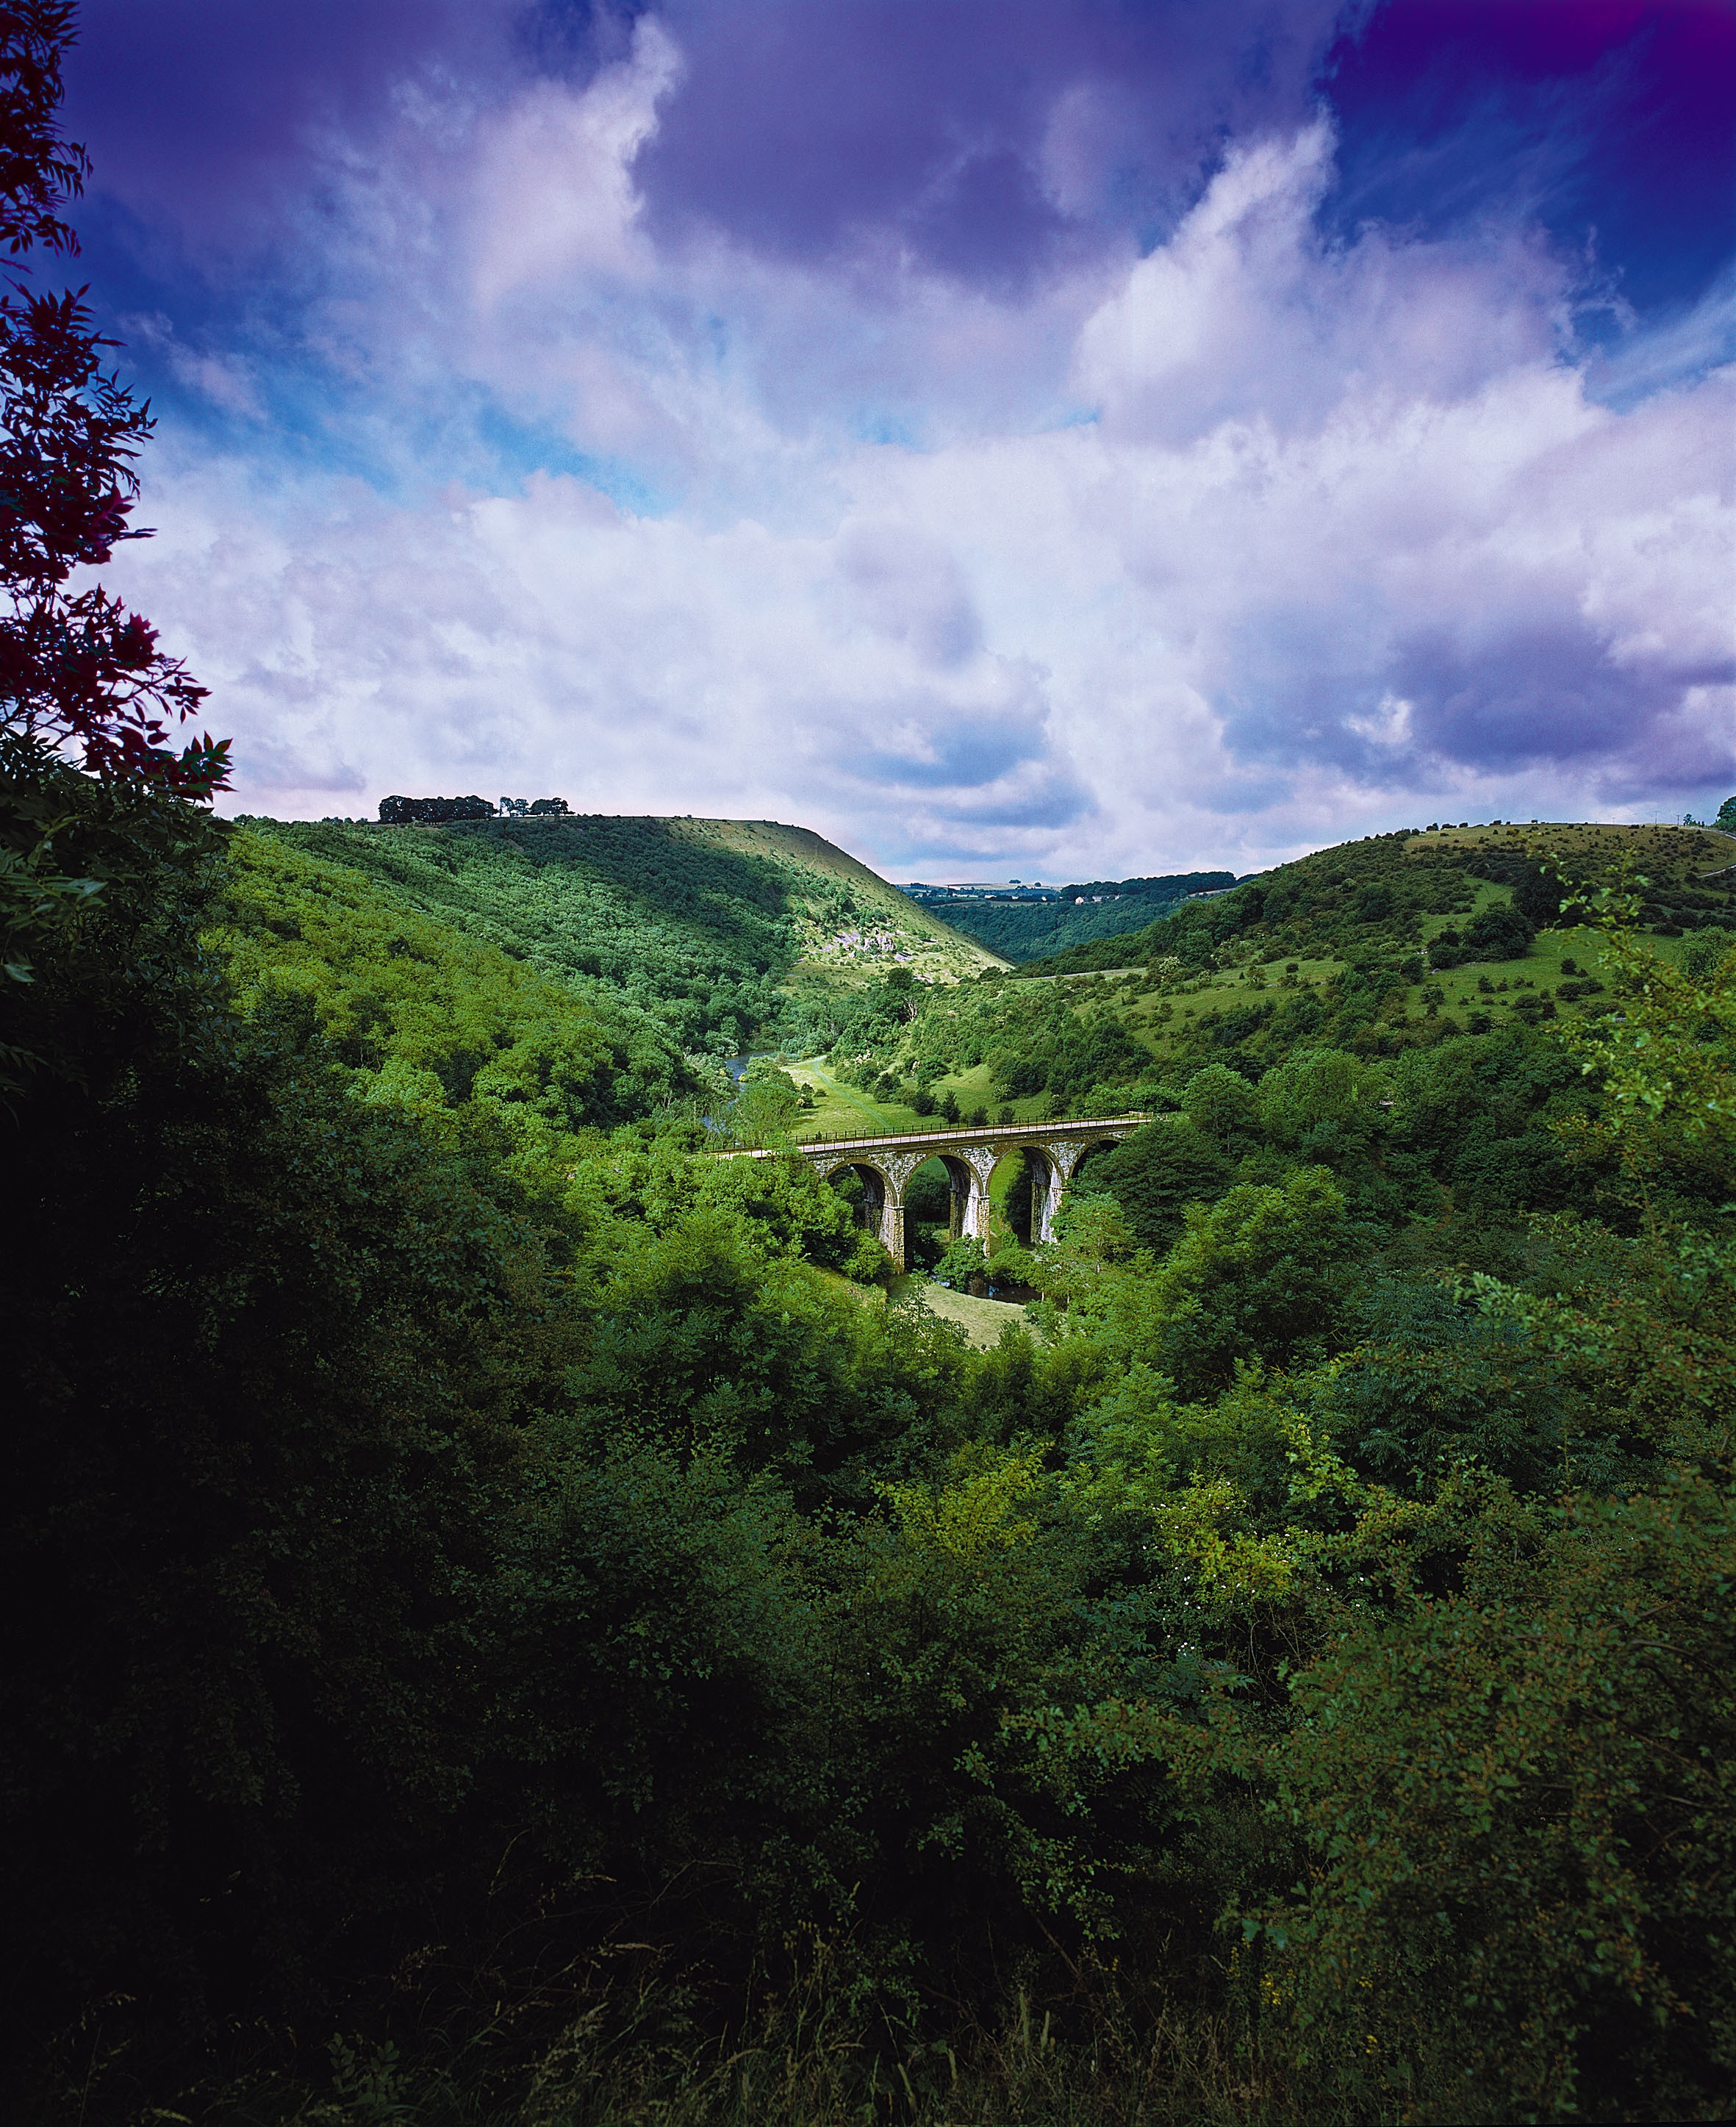 Monsal Dale Railway Viaduct, Derbyshire